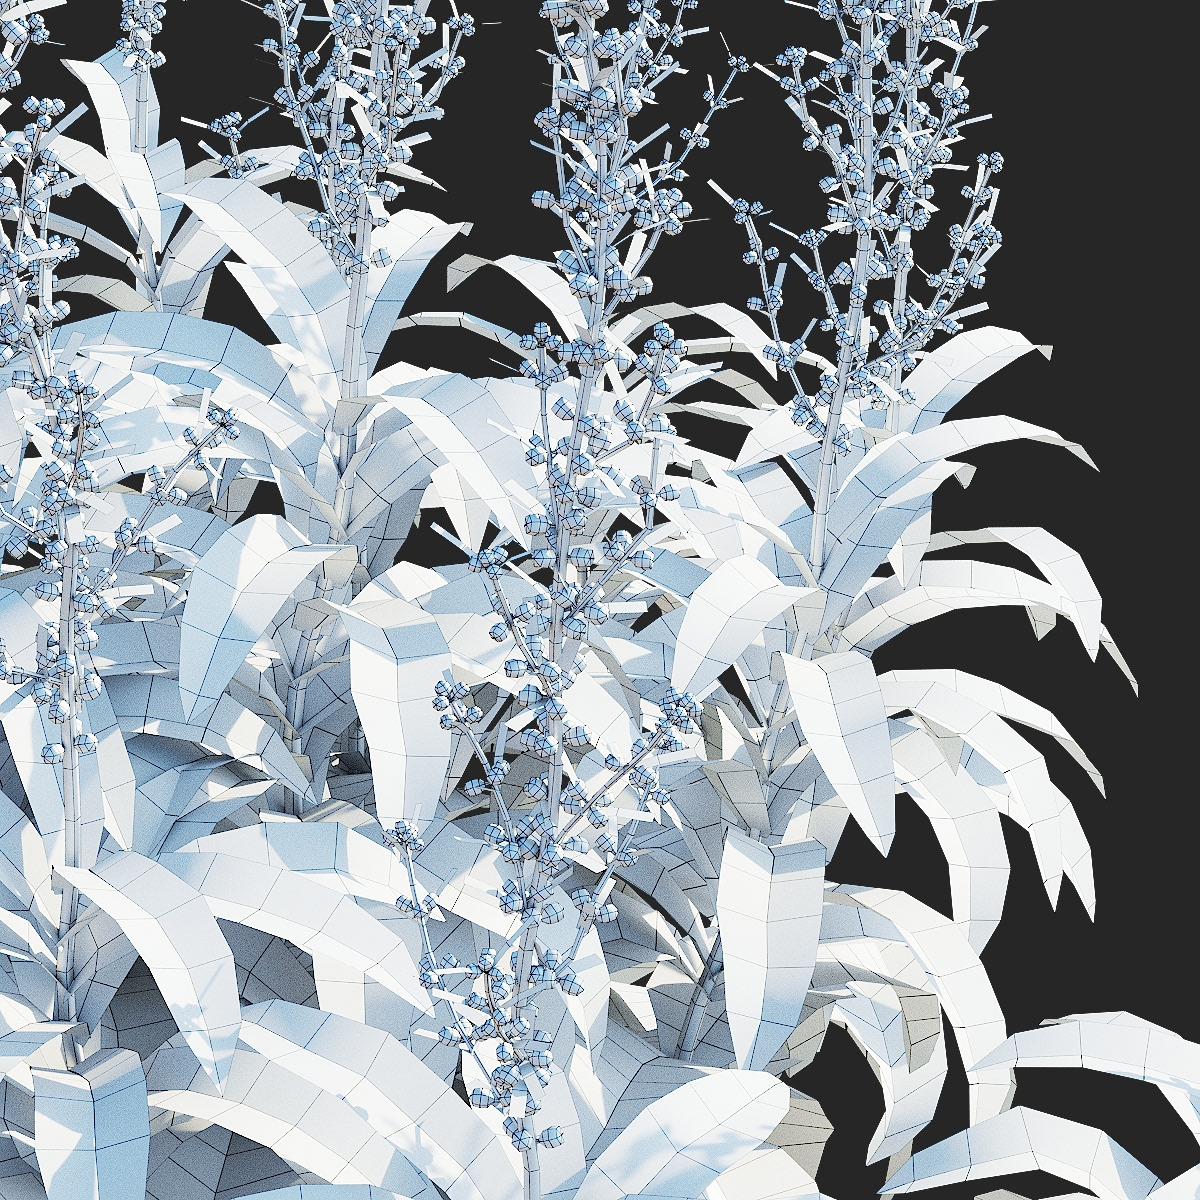 3D 3d modeling Render visualization 3ds max exterior archviz plants bush sagebrush